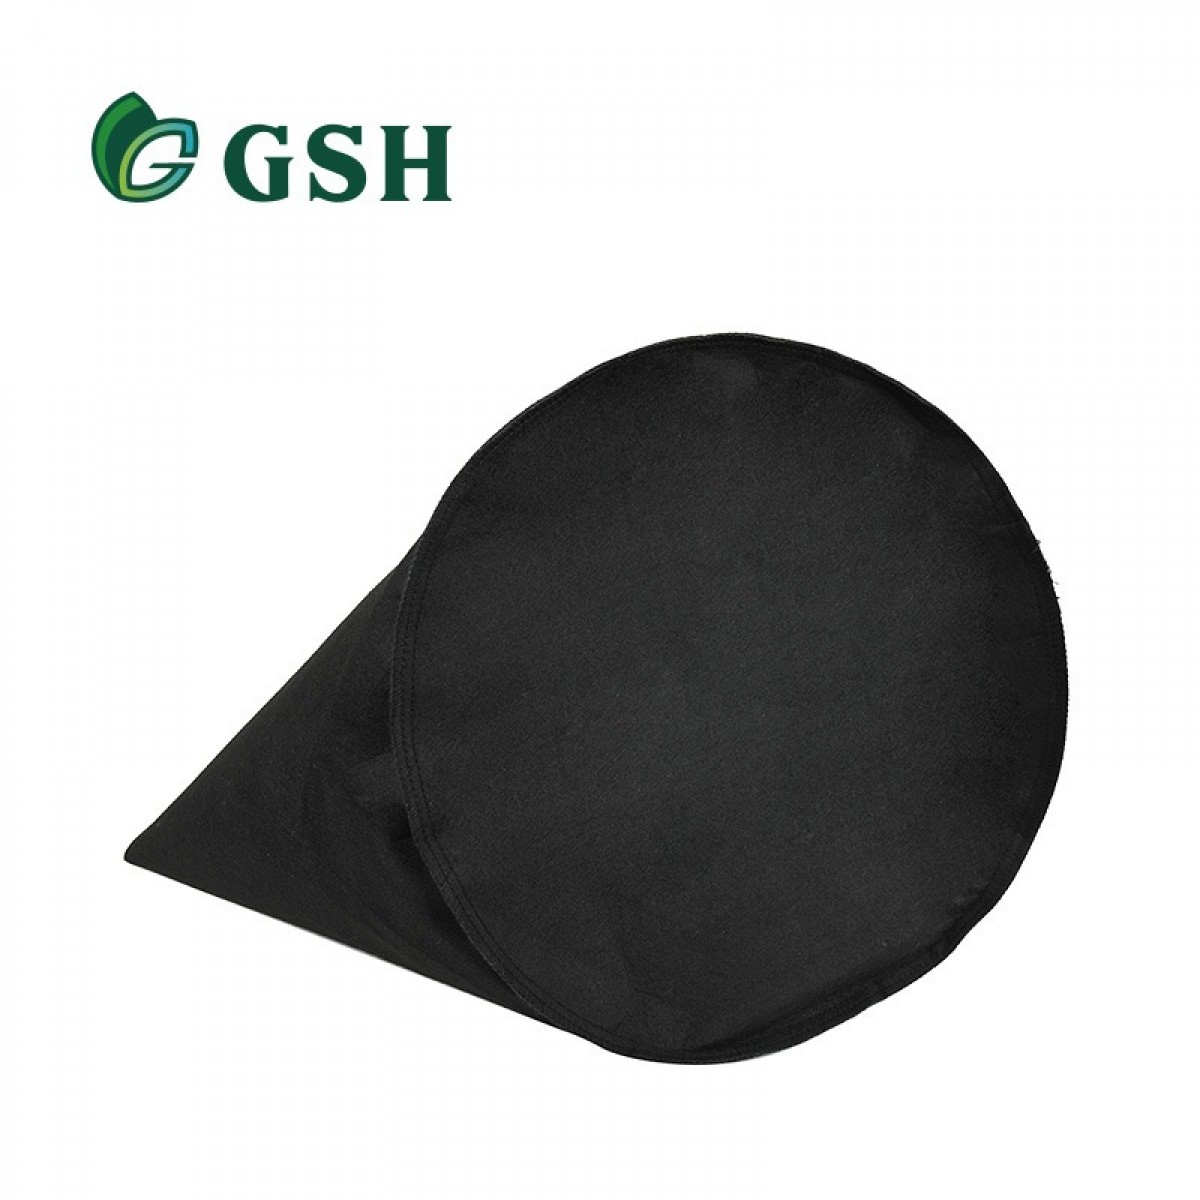 GSH Gardener's Grow Bag (10Gal)